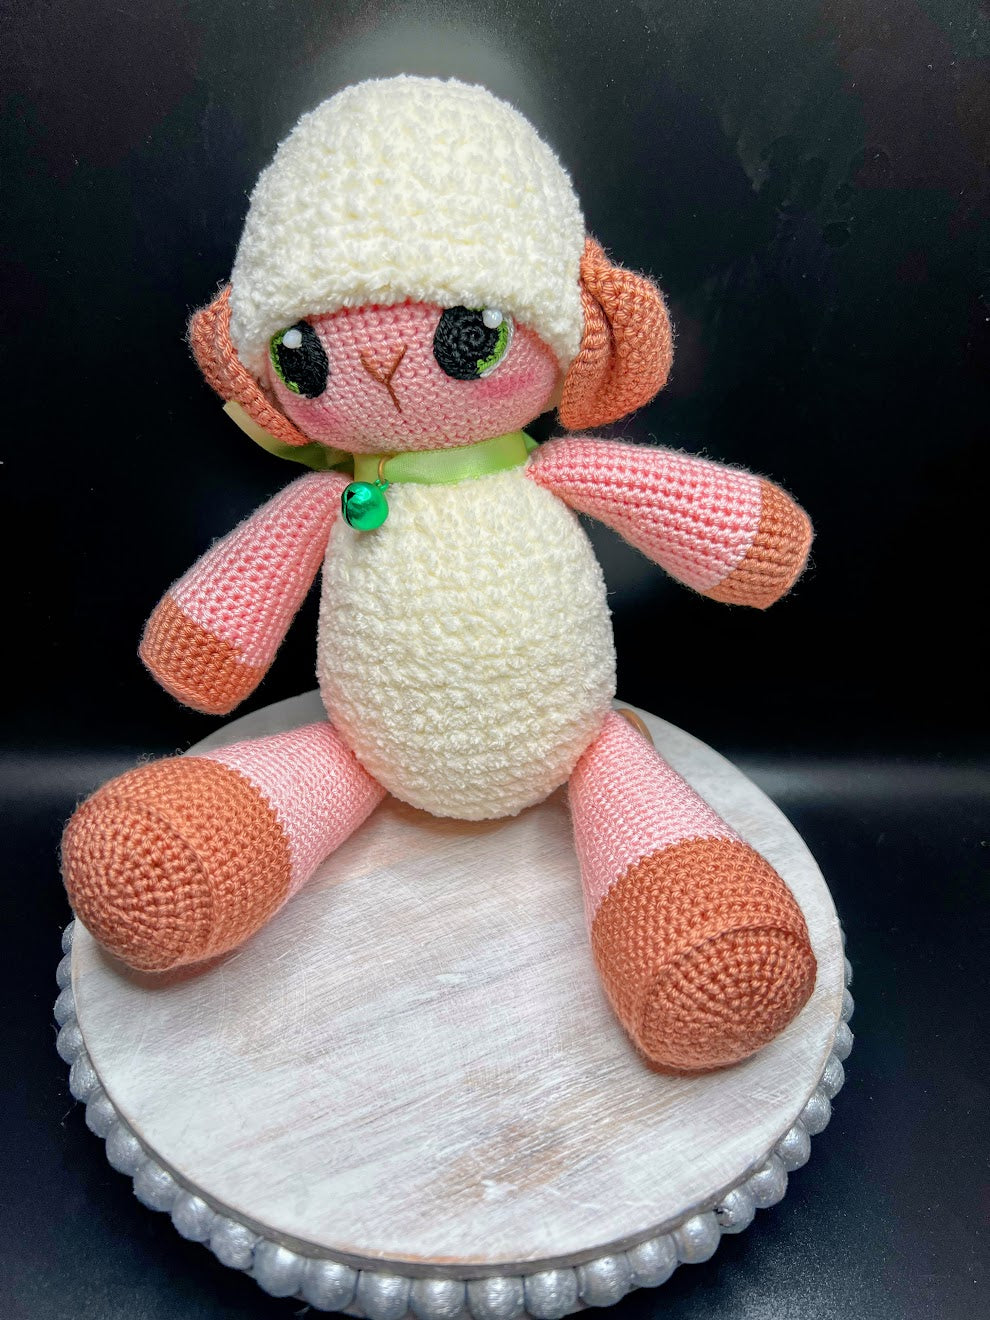 Stuffed Sheep Toy - Crochet Knitted Amigurumi Toy